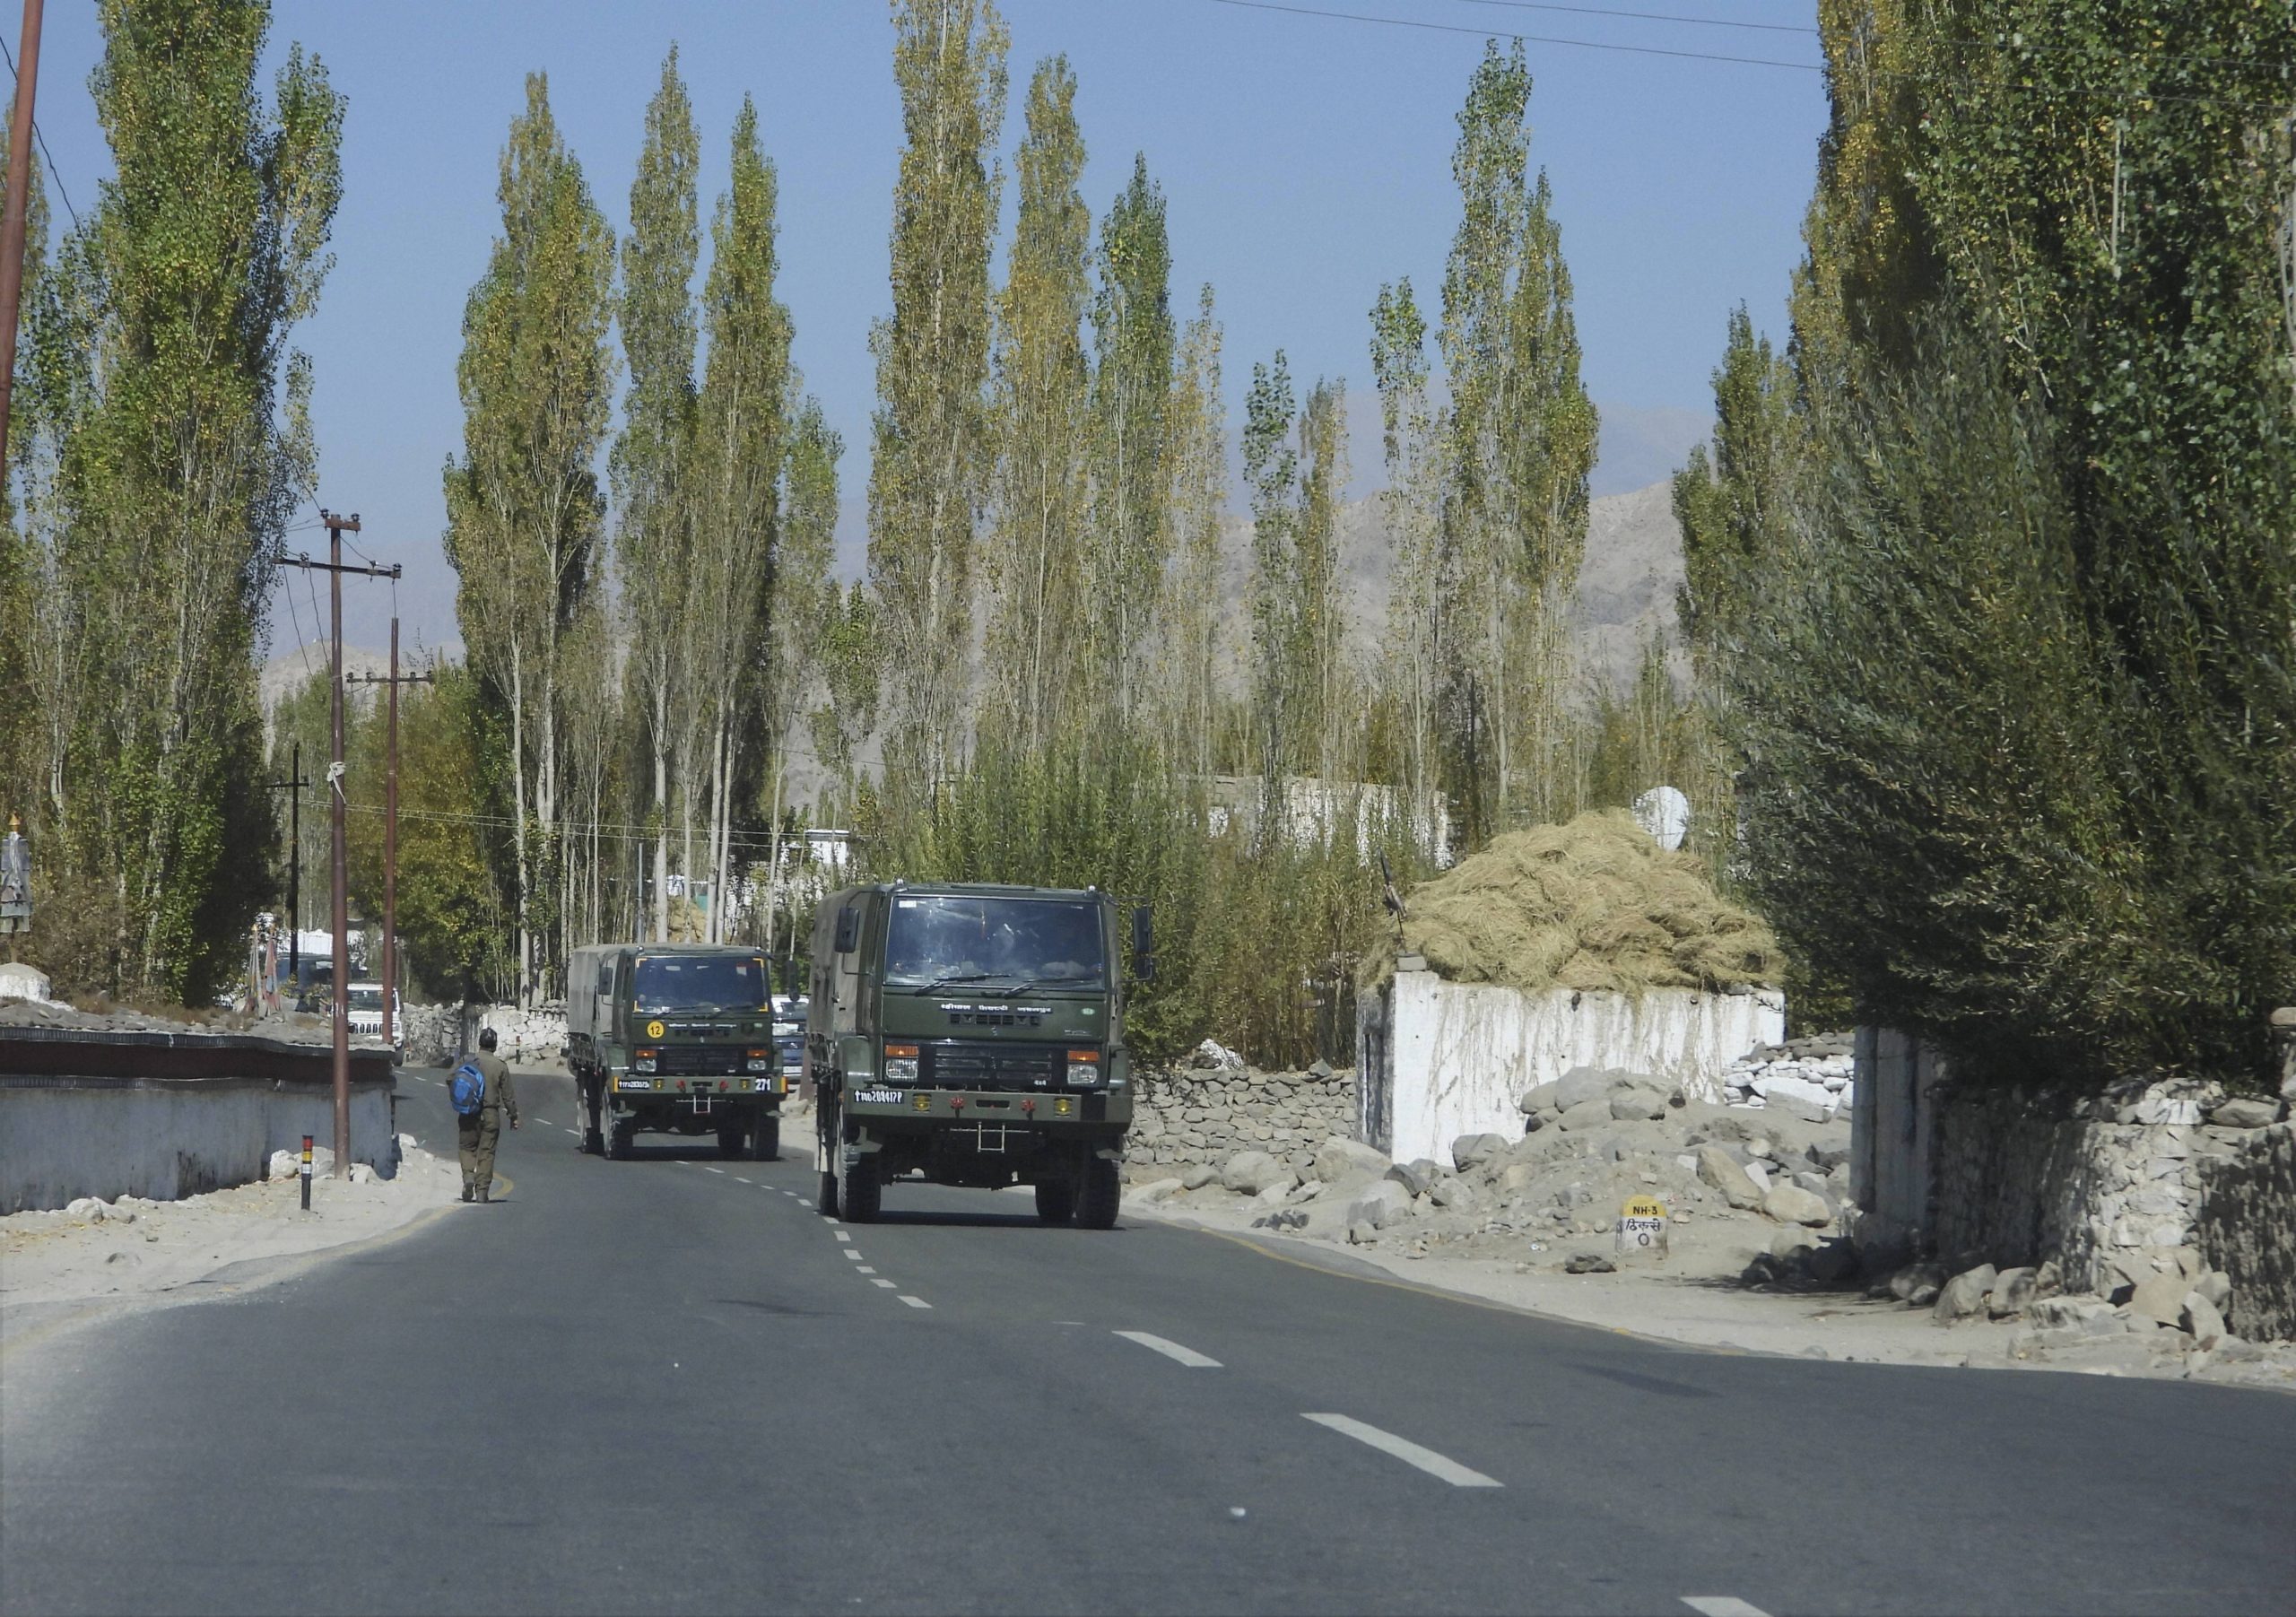 Pakistan targets civilian areas along LoC in unprovoked ceasefire violation